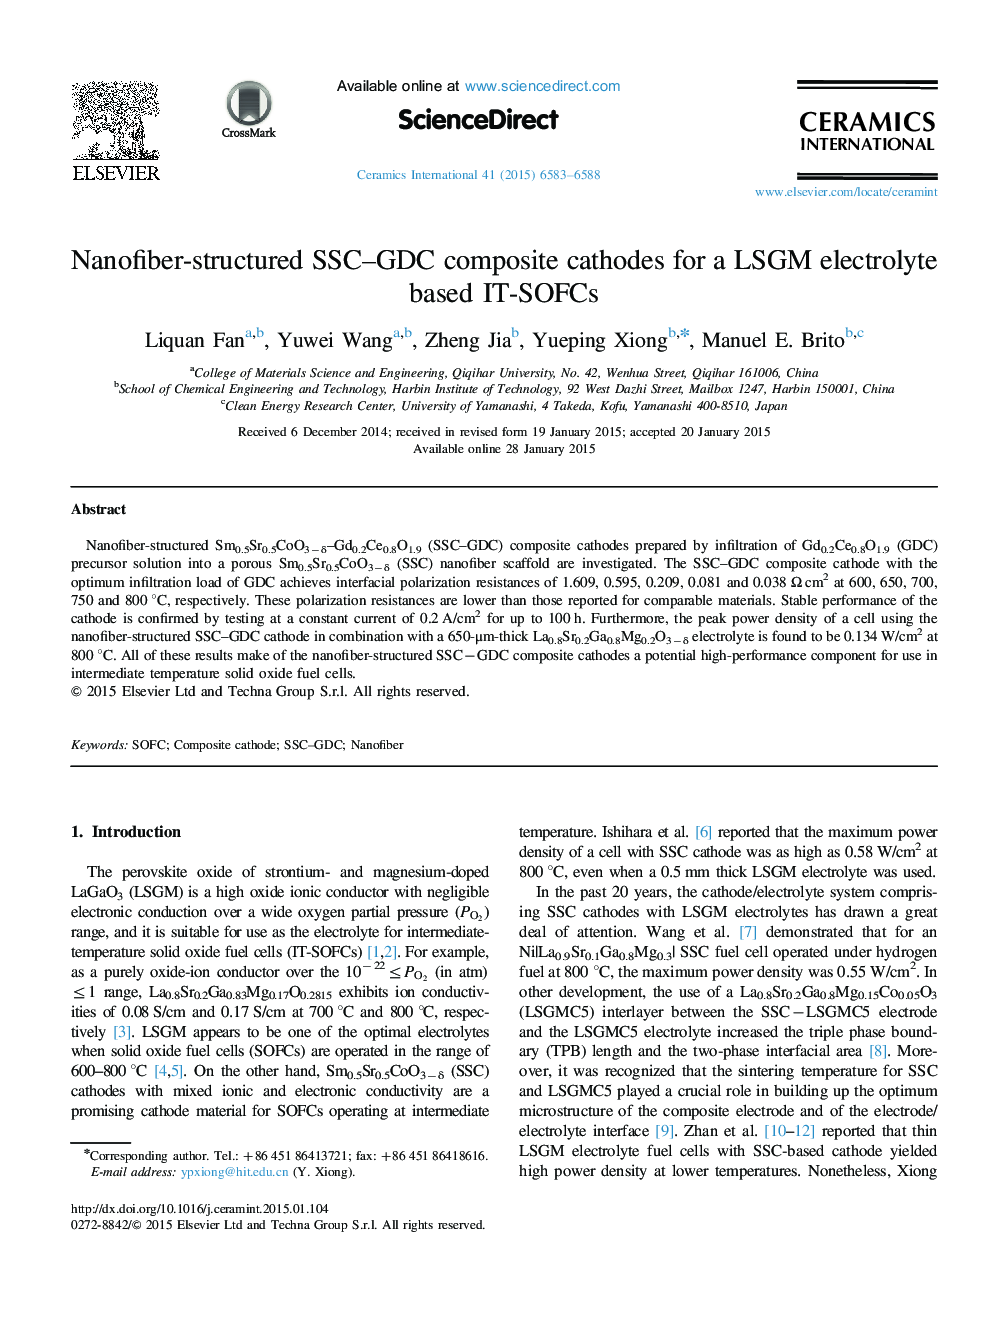 Nanofiber-structured SSC–GDC composite cathodes for a LSGM electrolyte based IT-SOFCs